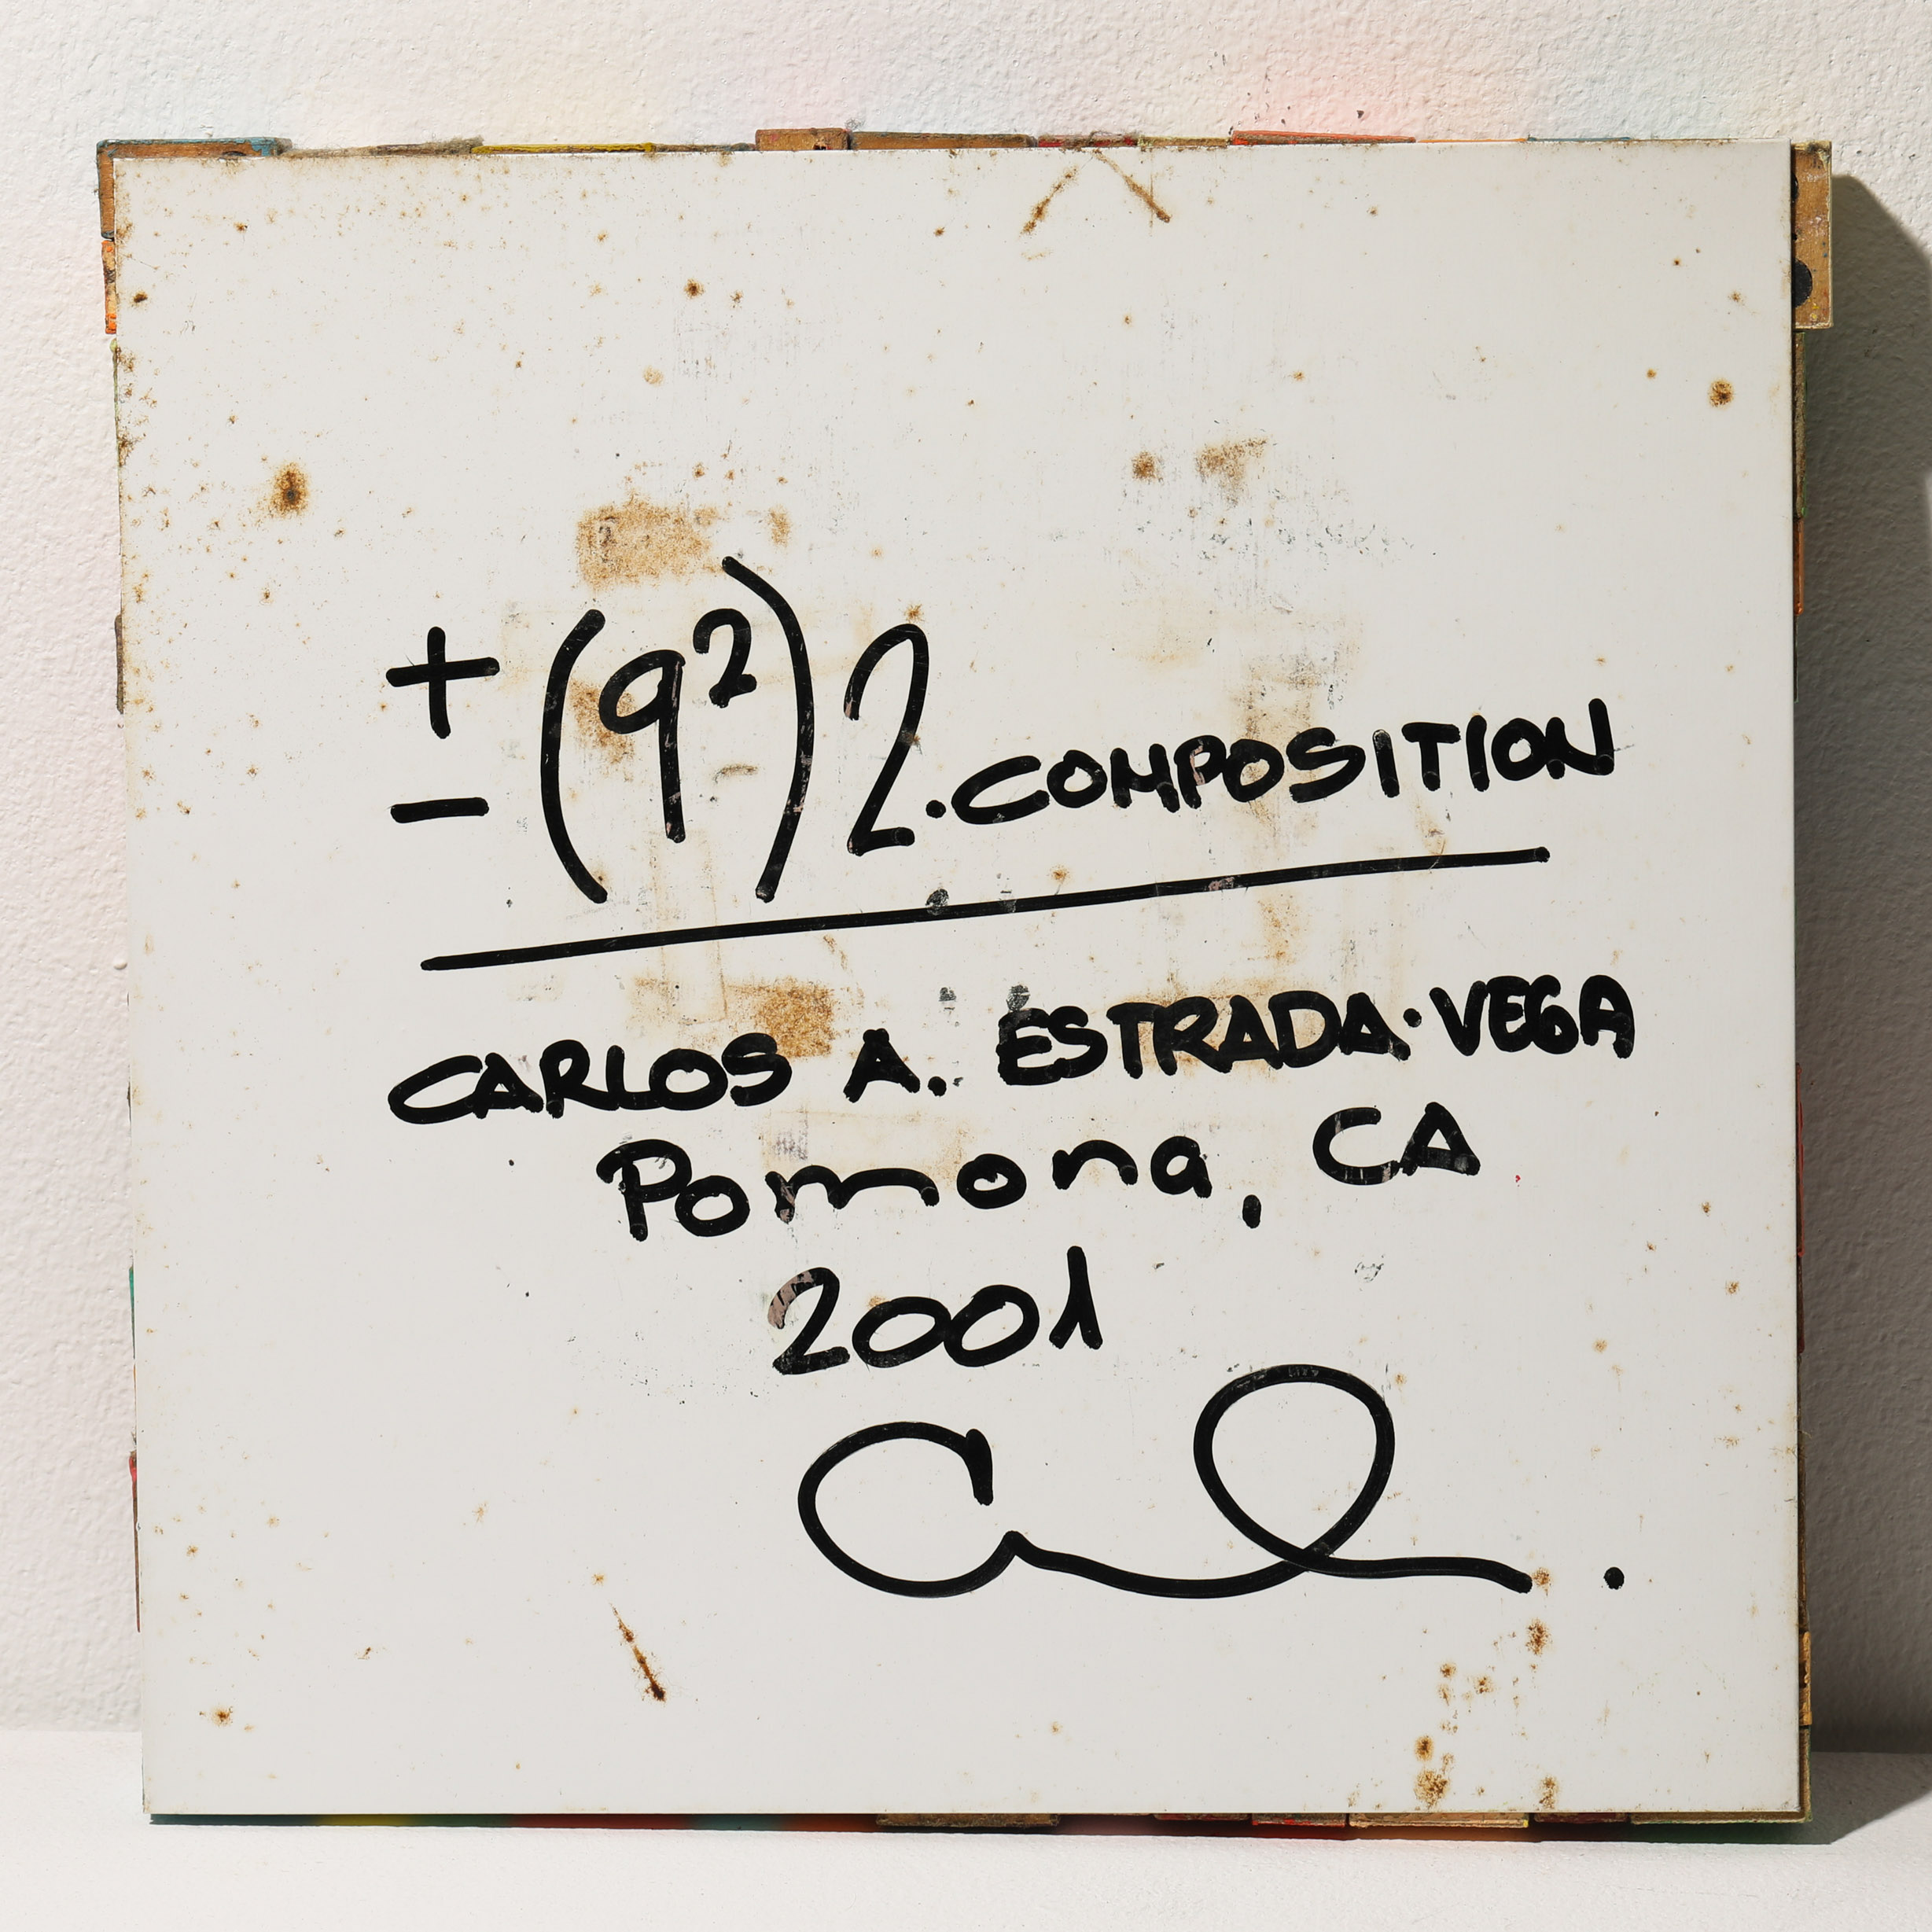 Carlos Estrada-Vega, 2001, small cube wall object - Image 4 of 4